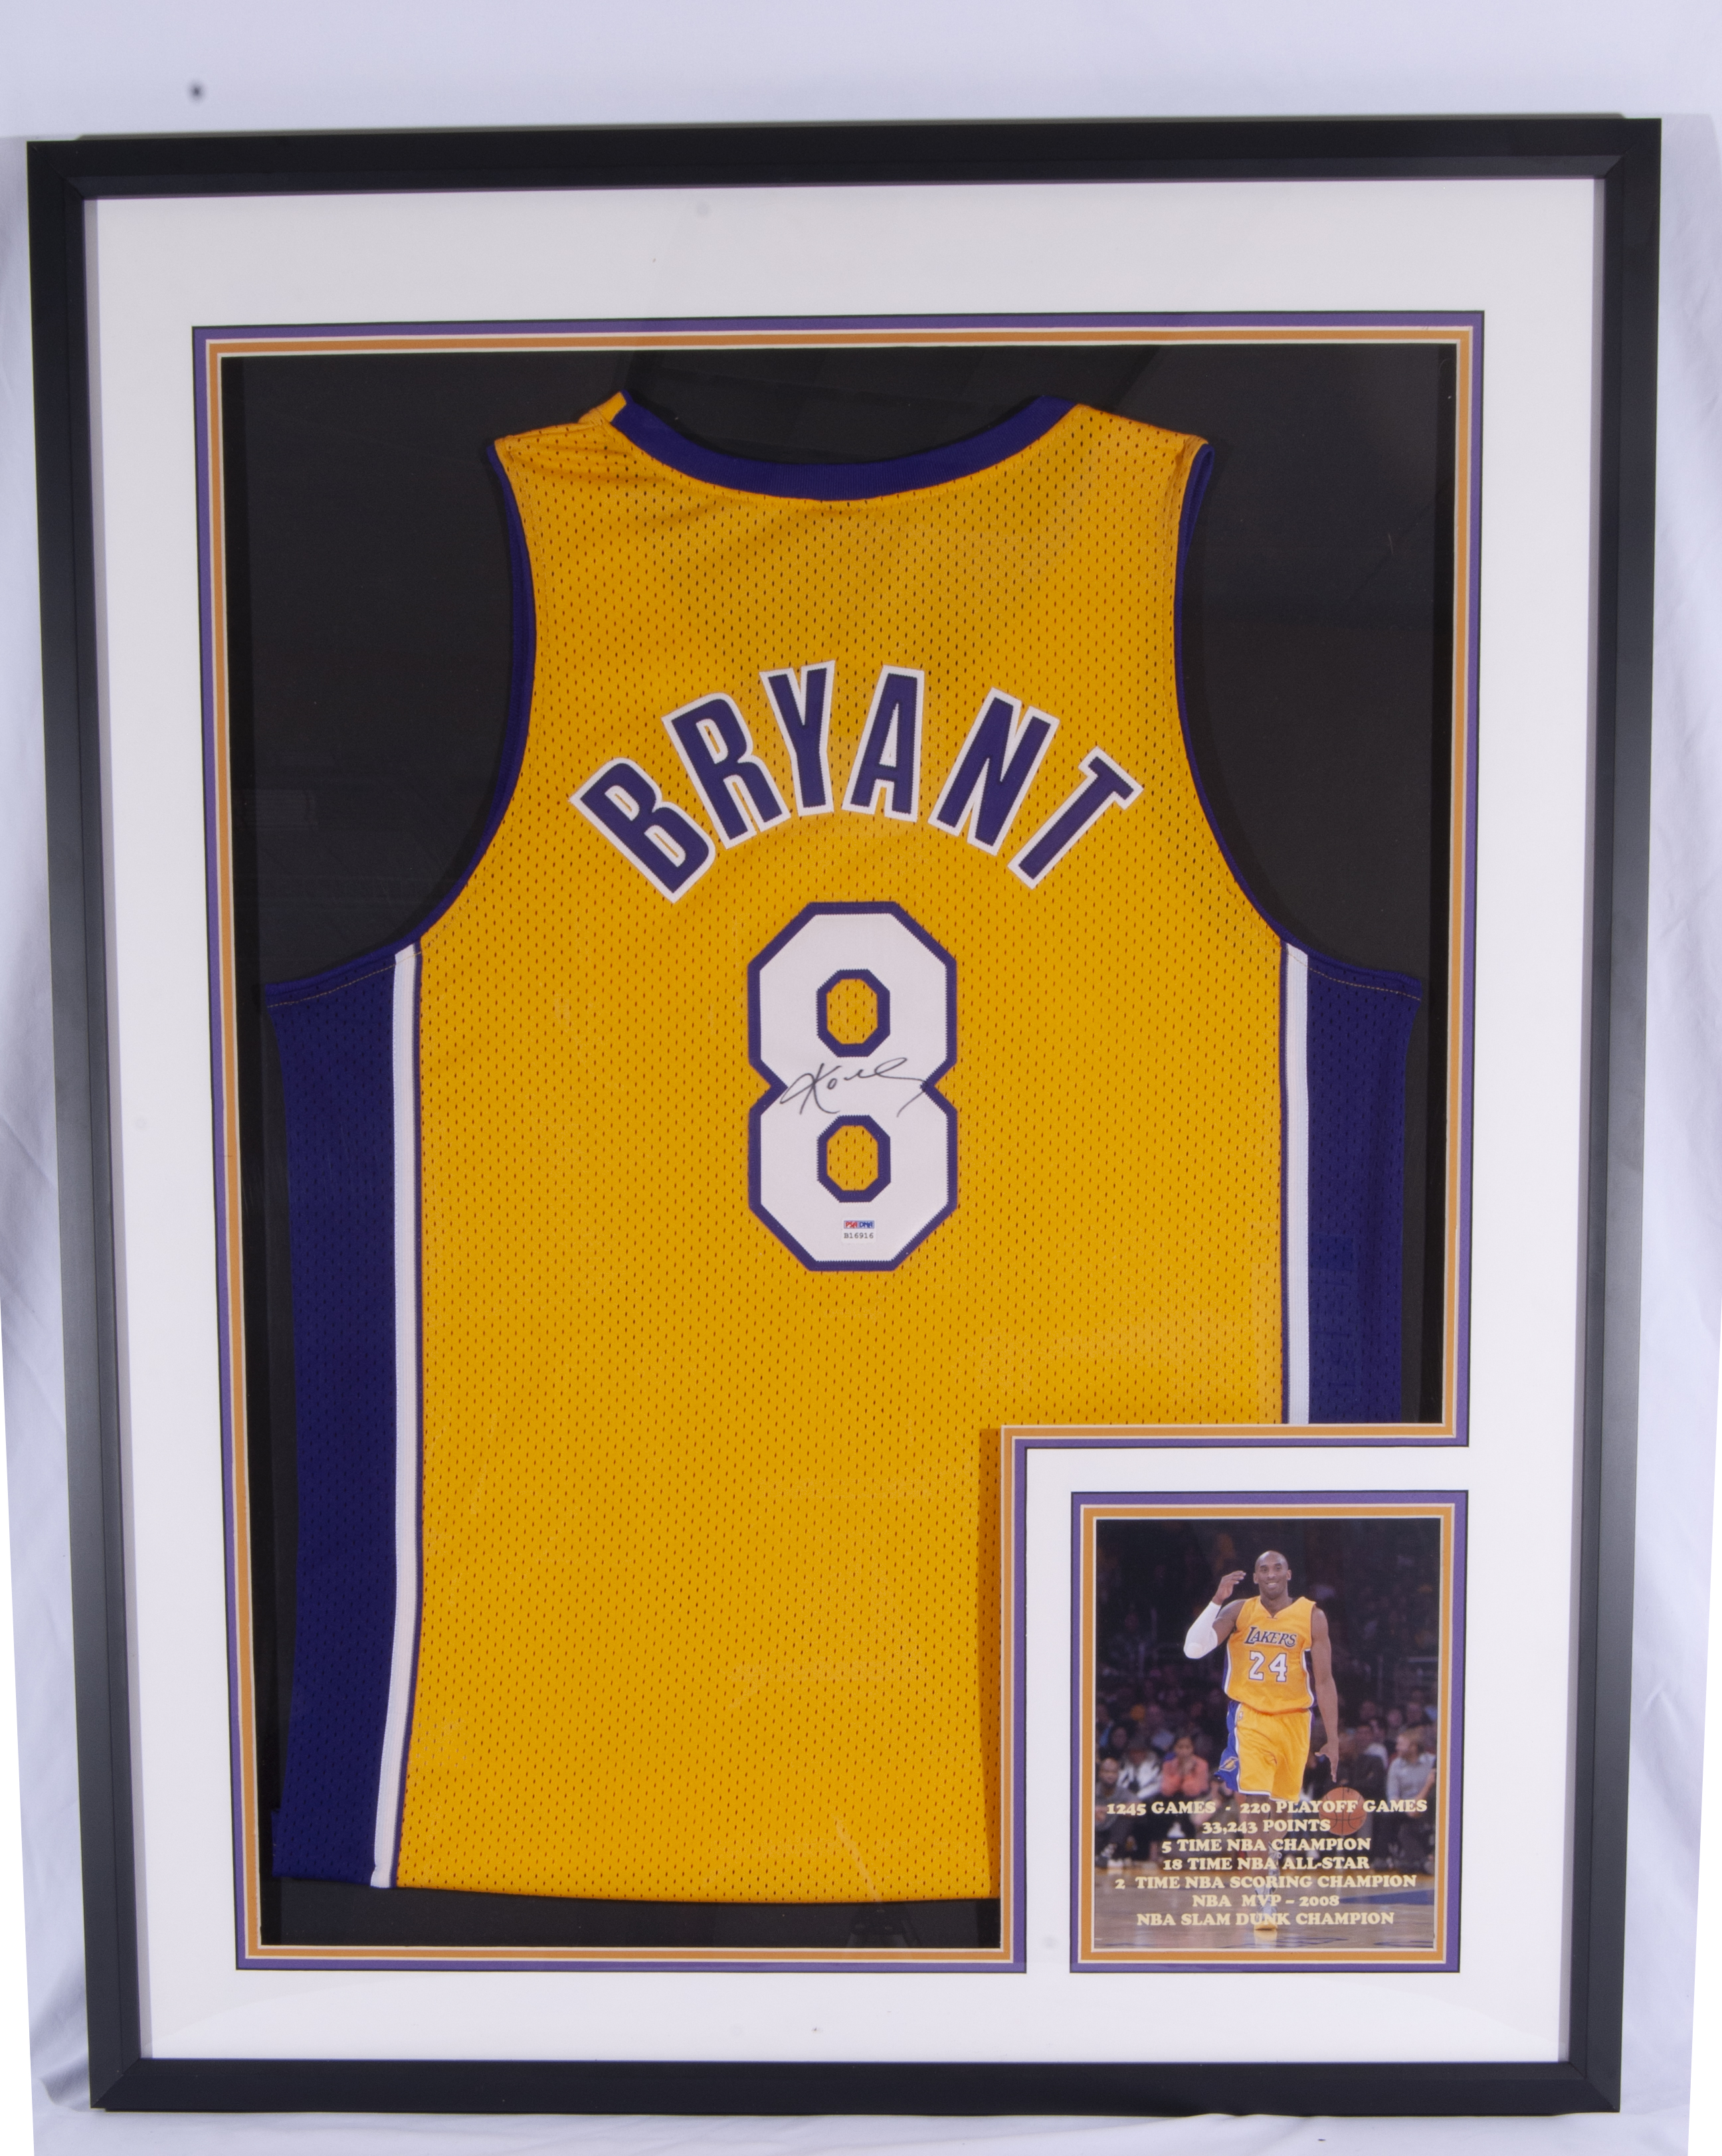 Autographed Kobe Bryant Photo - #8 Jersey Number framed PSA 8